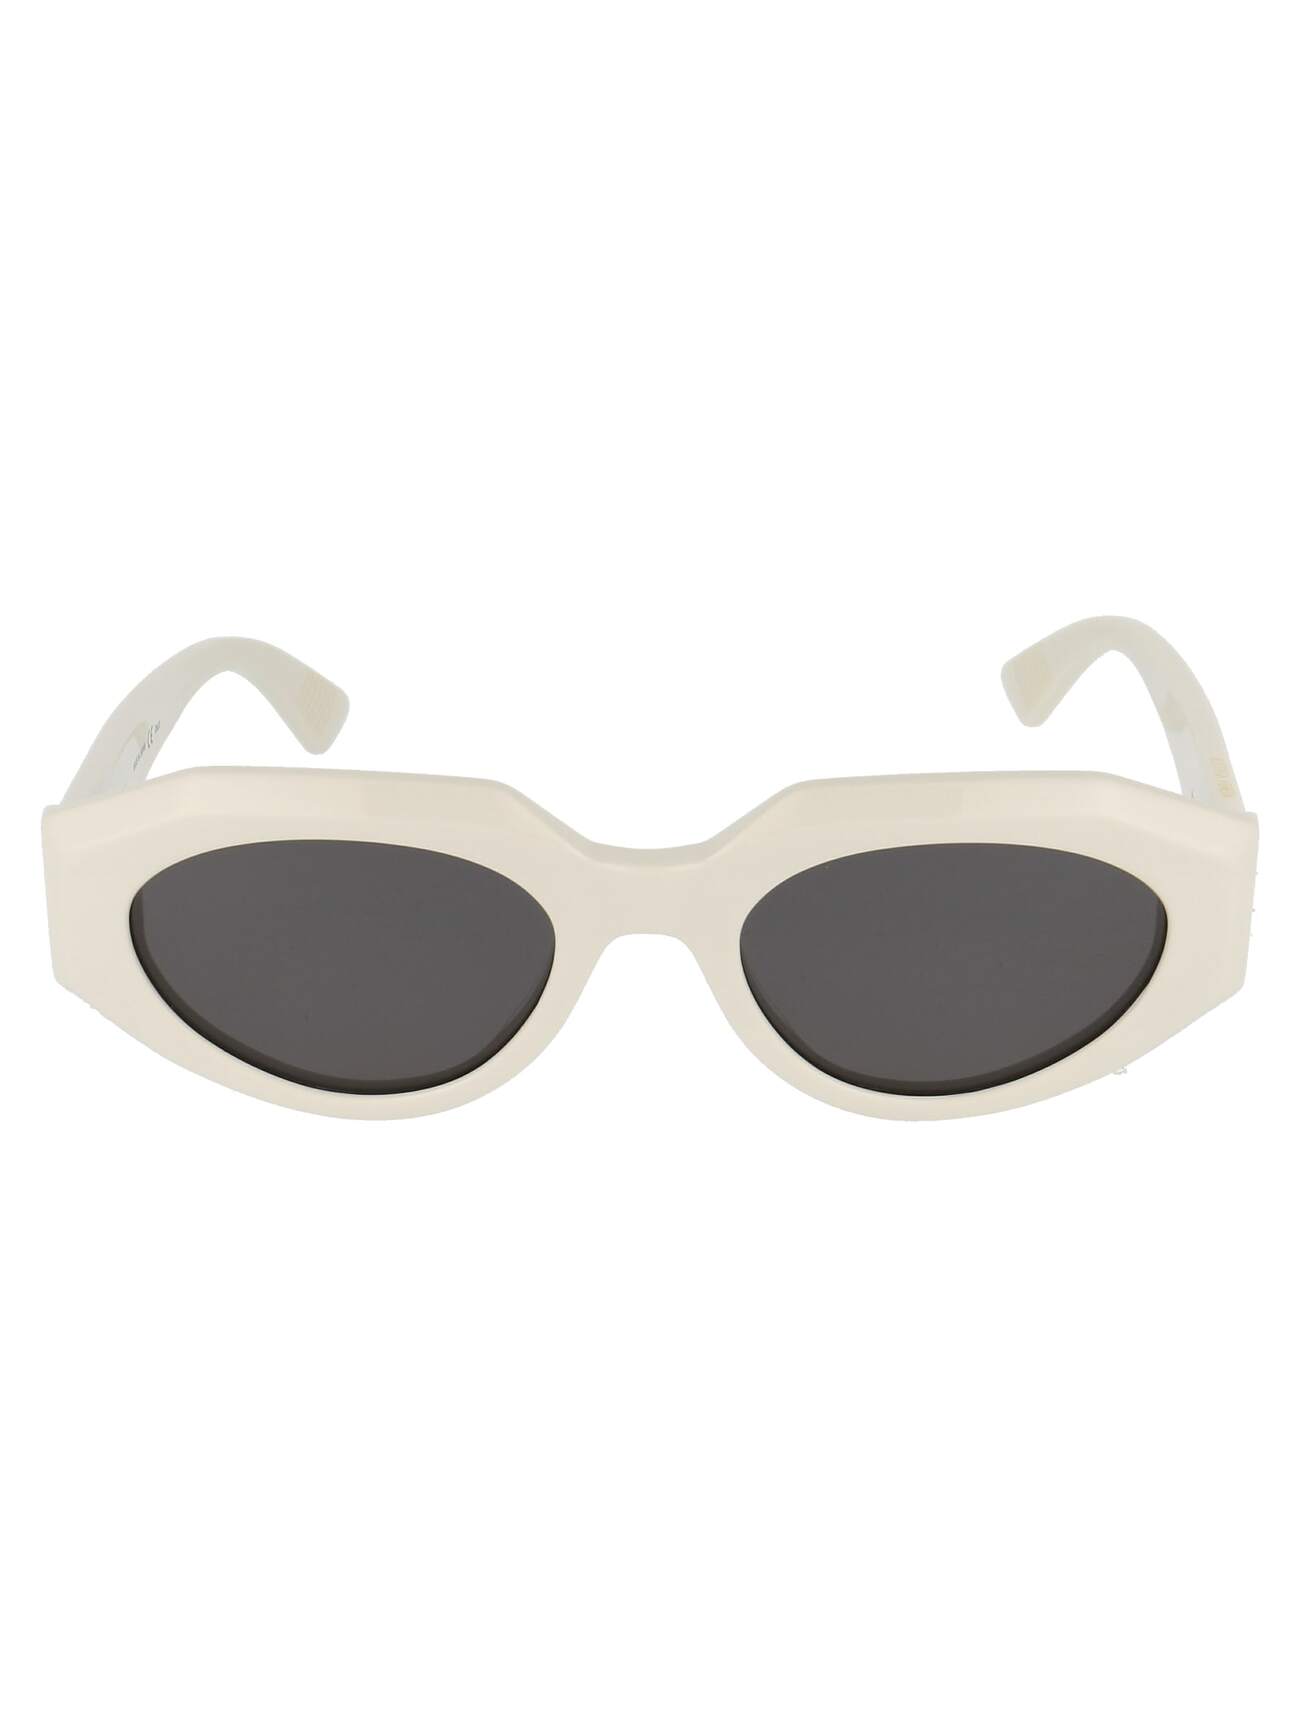 Bottega Veneta Eyewear Bv1031s Sunglasses in grey / ivory